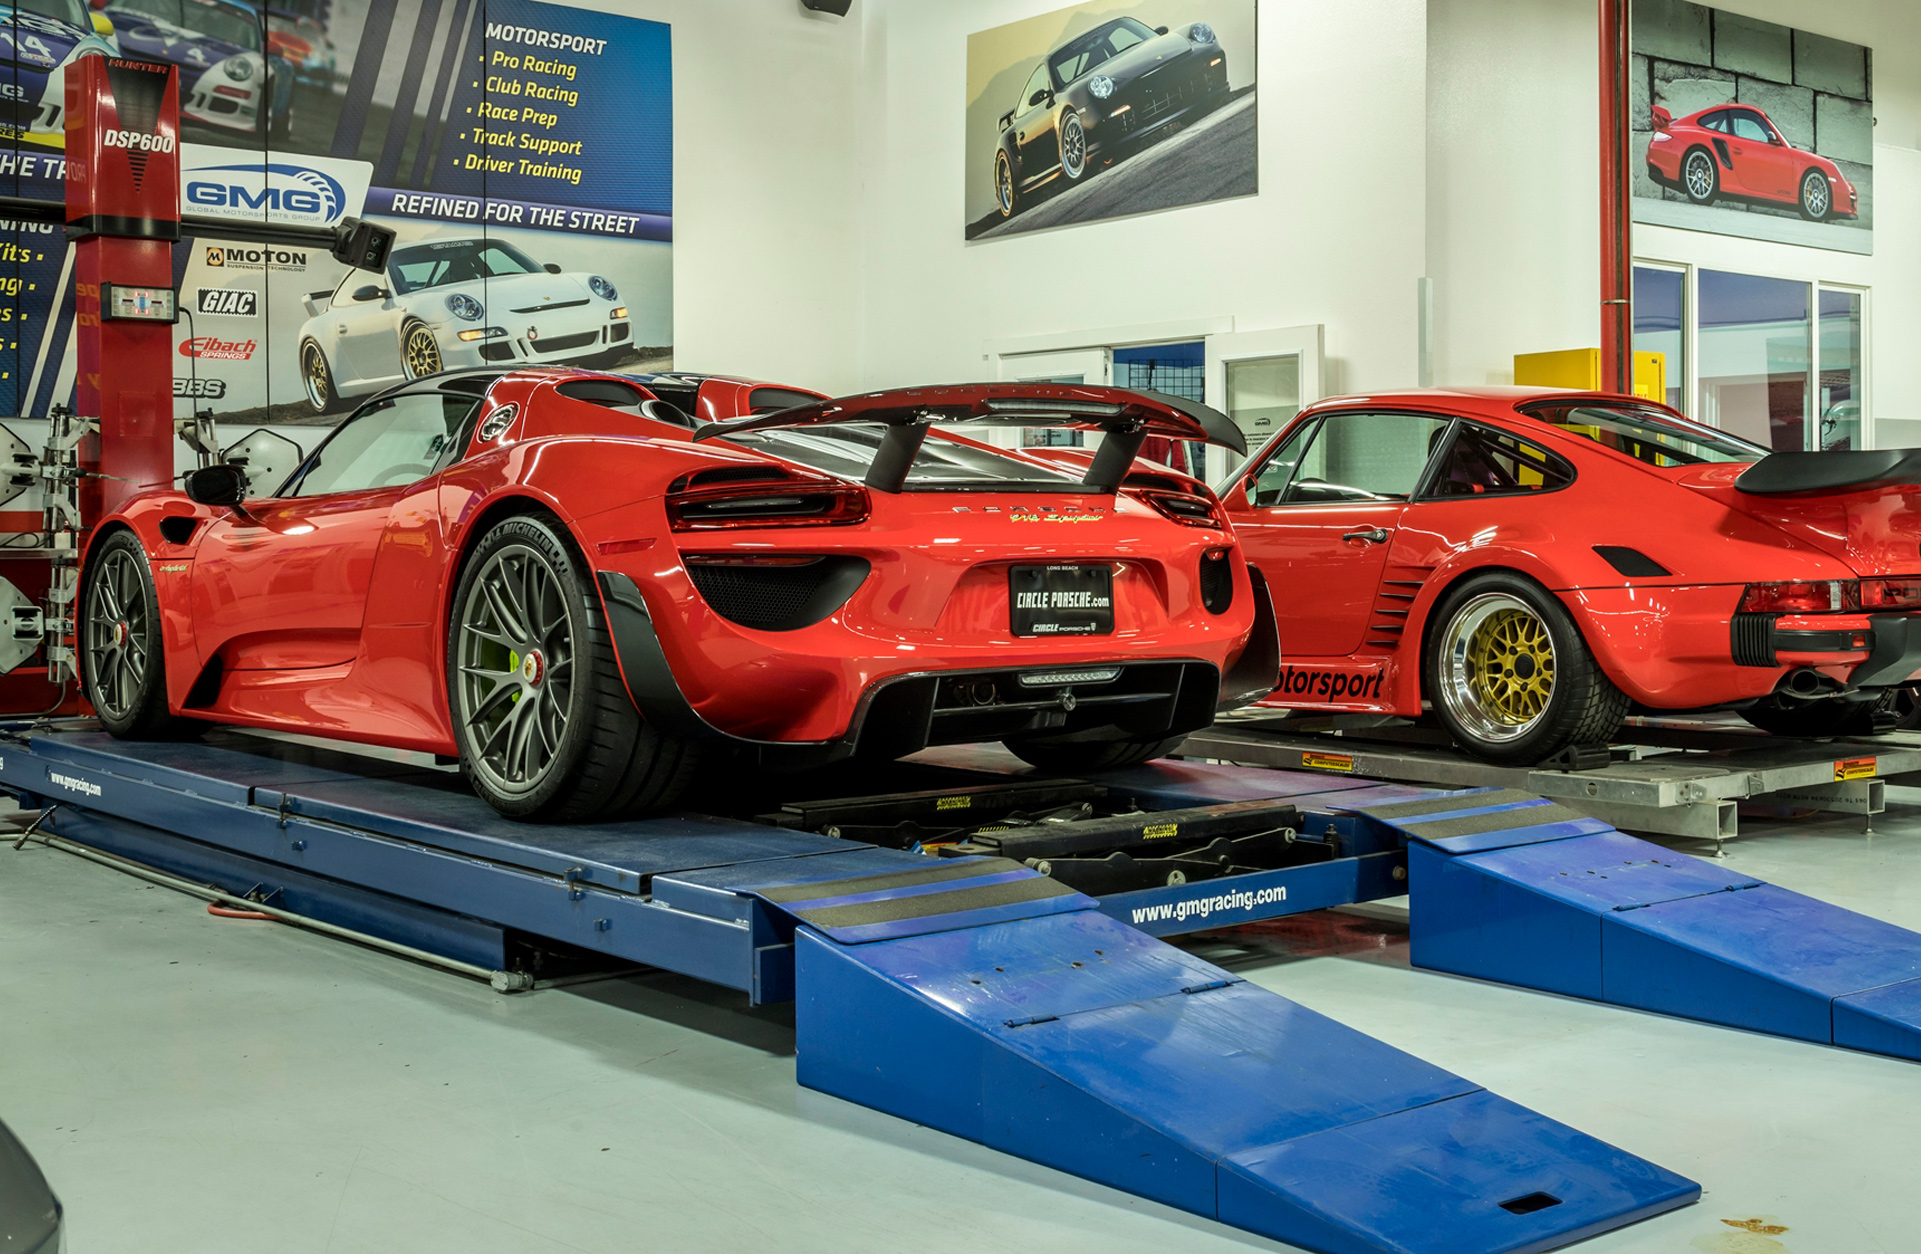 Porsche Factory Service at GMG Racing